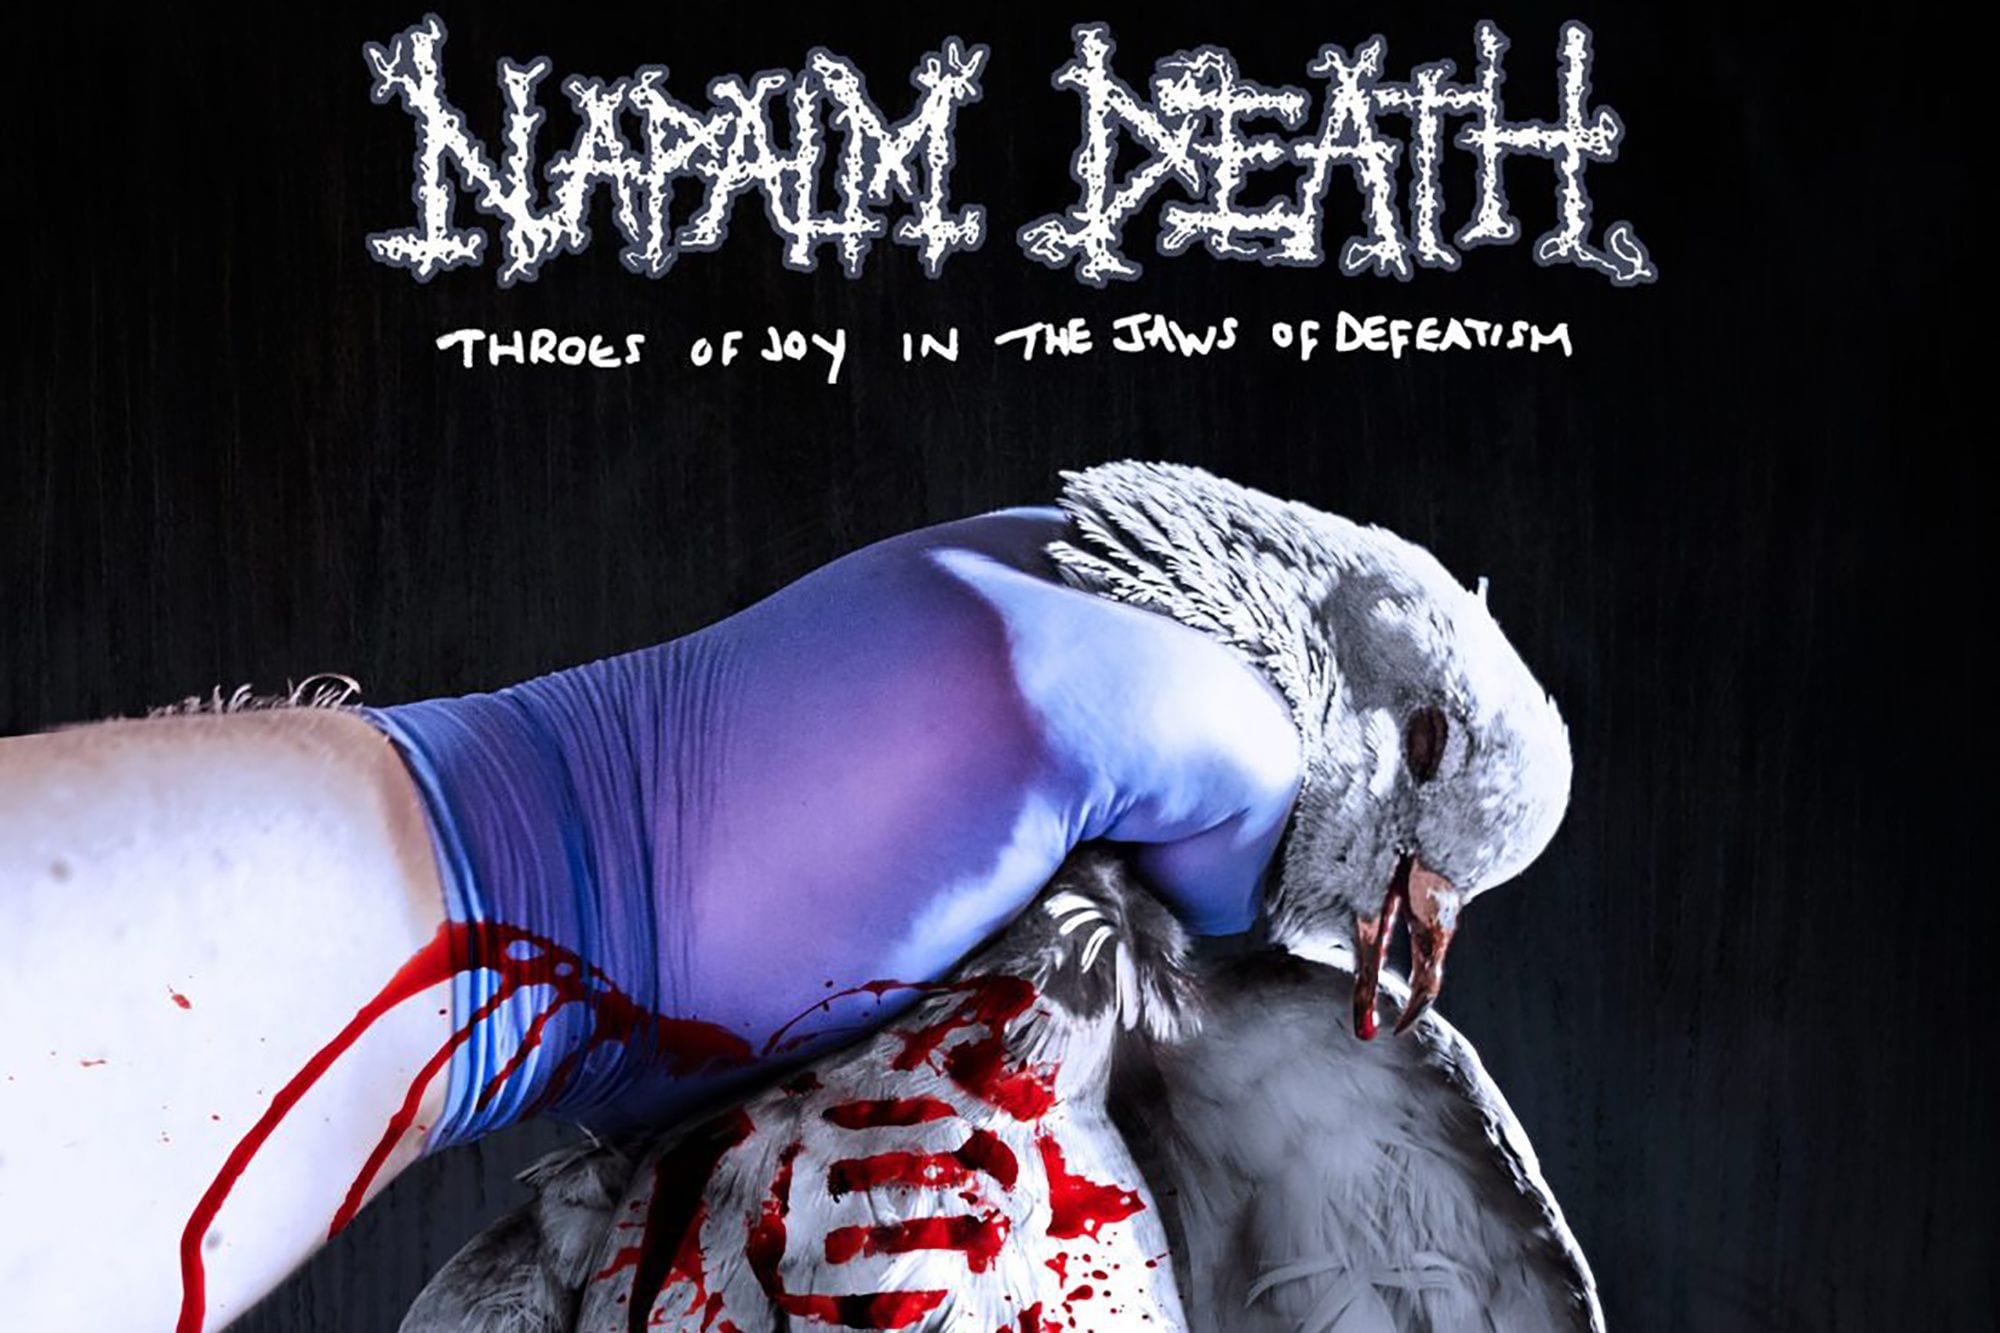 Napalm Death Return With Their Most Vital Album in Decades